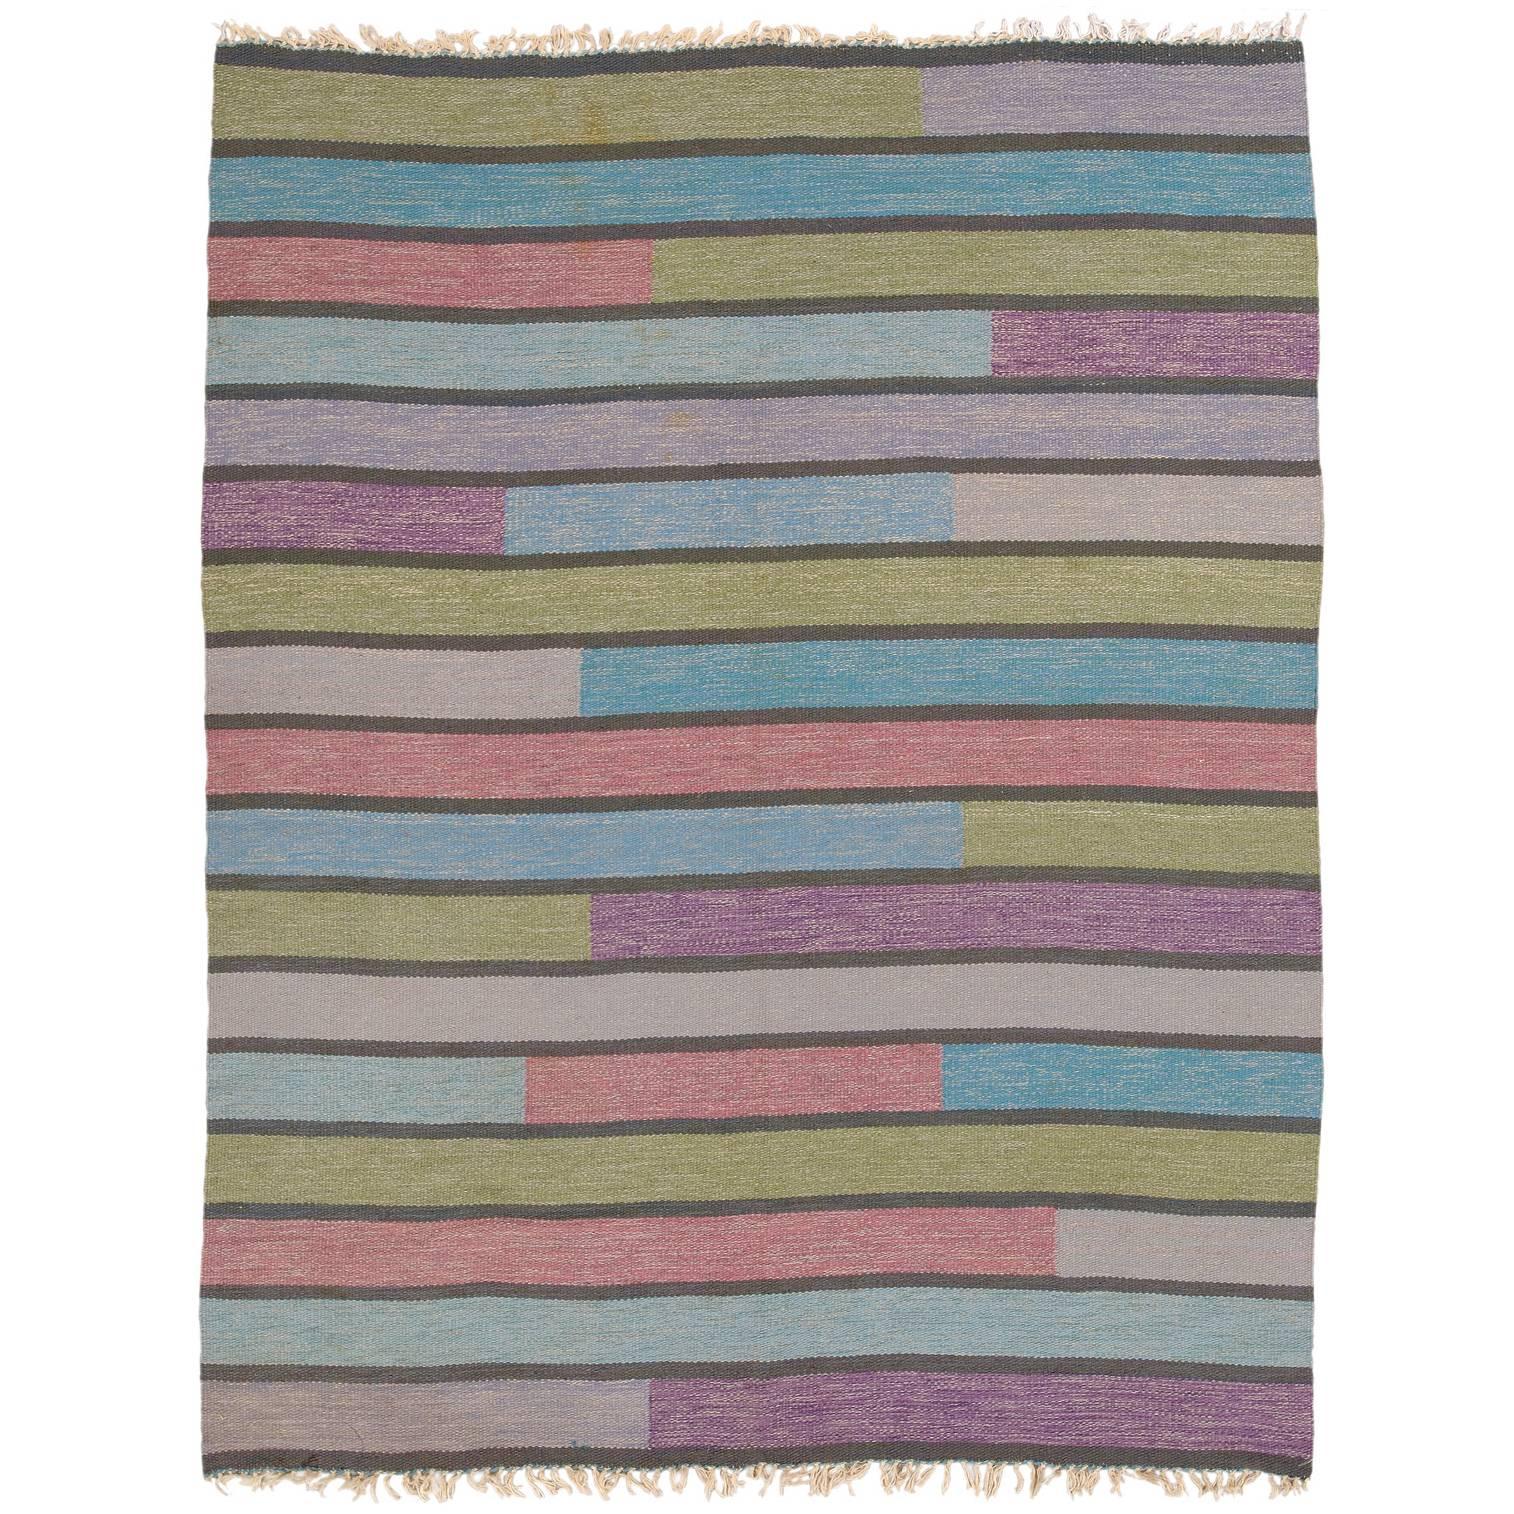 20th Century Swedish Flat-Weave Carpet by Ingrid Hellman-Knafve For Sale